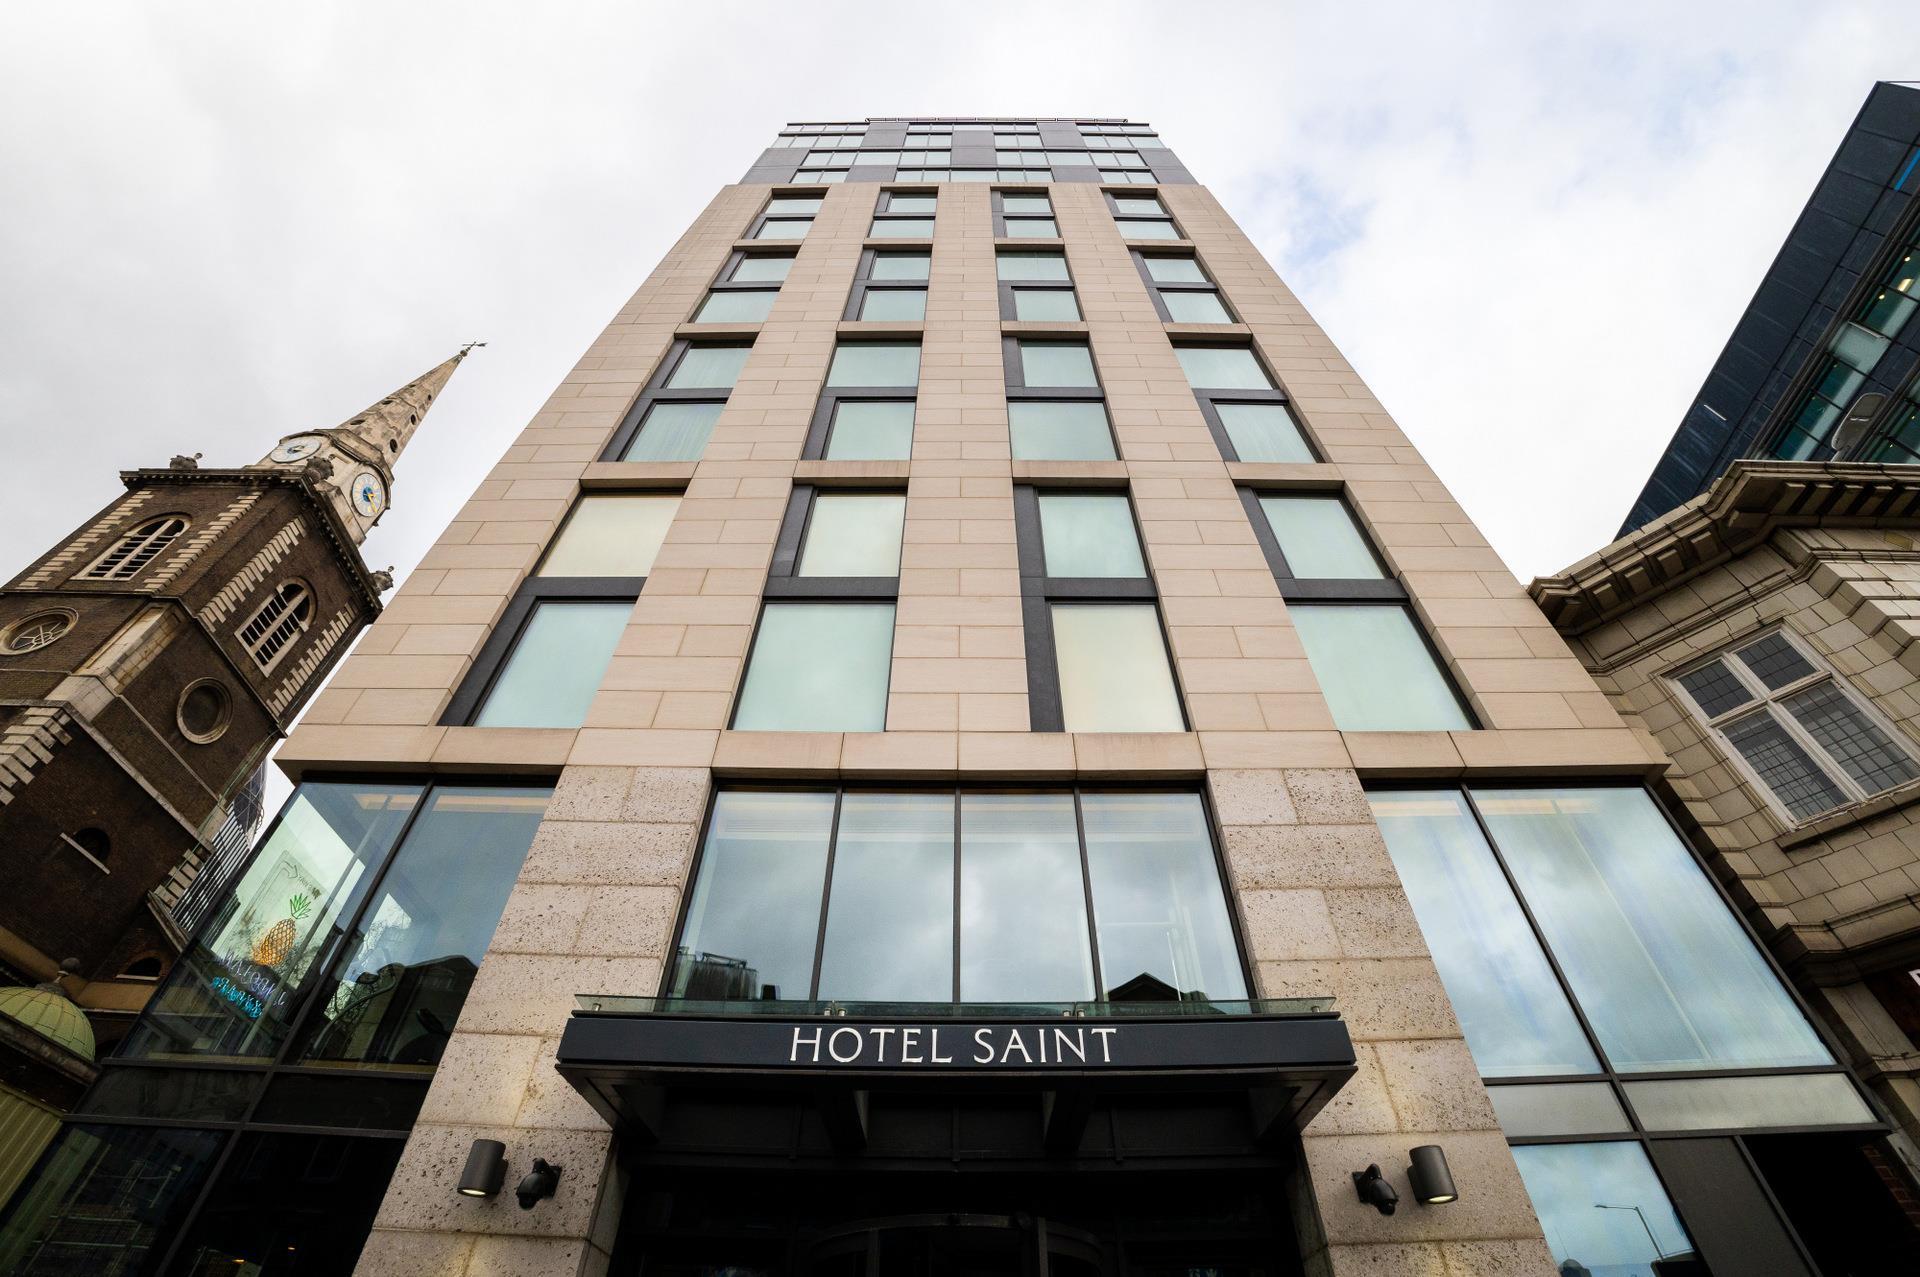 Hotel Saint (Formerly Dorsett City) in London, GB1